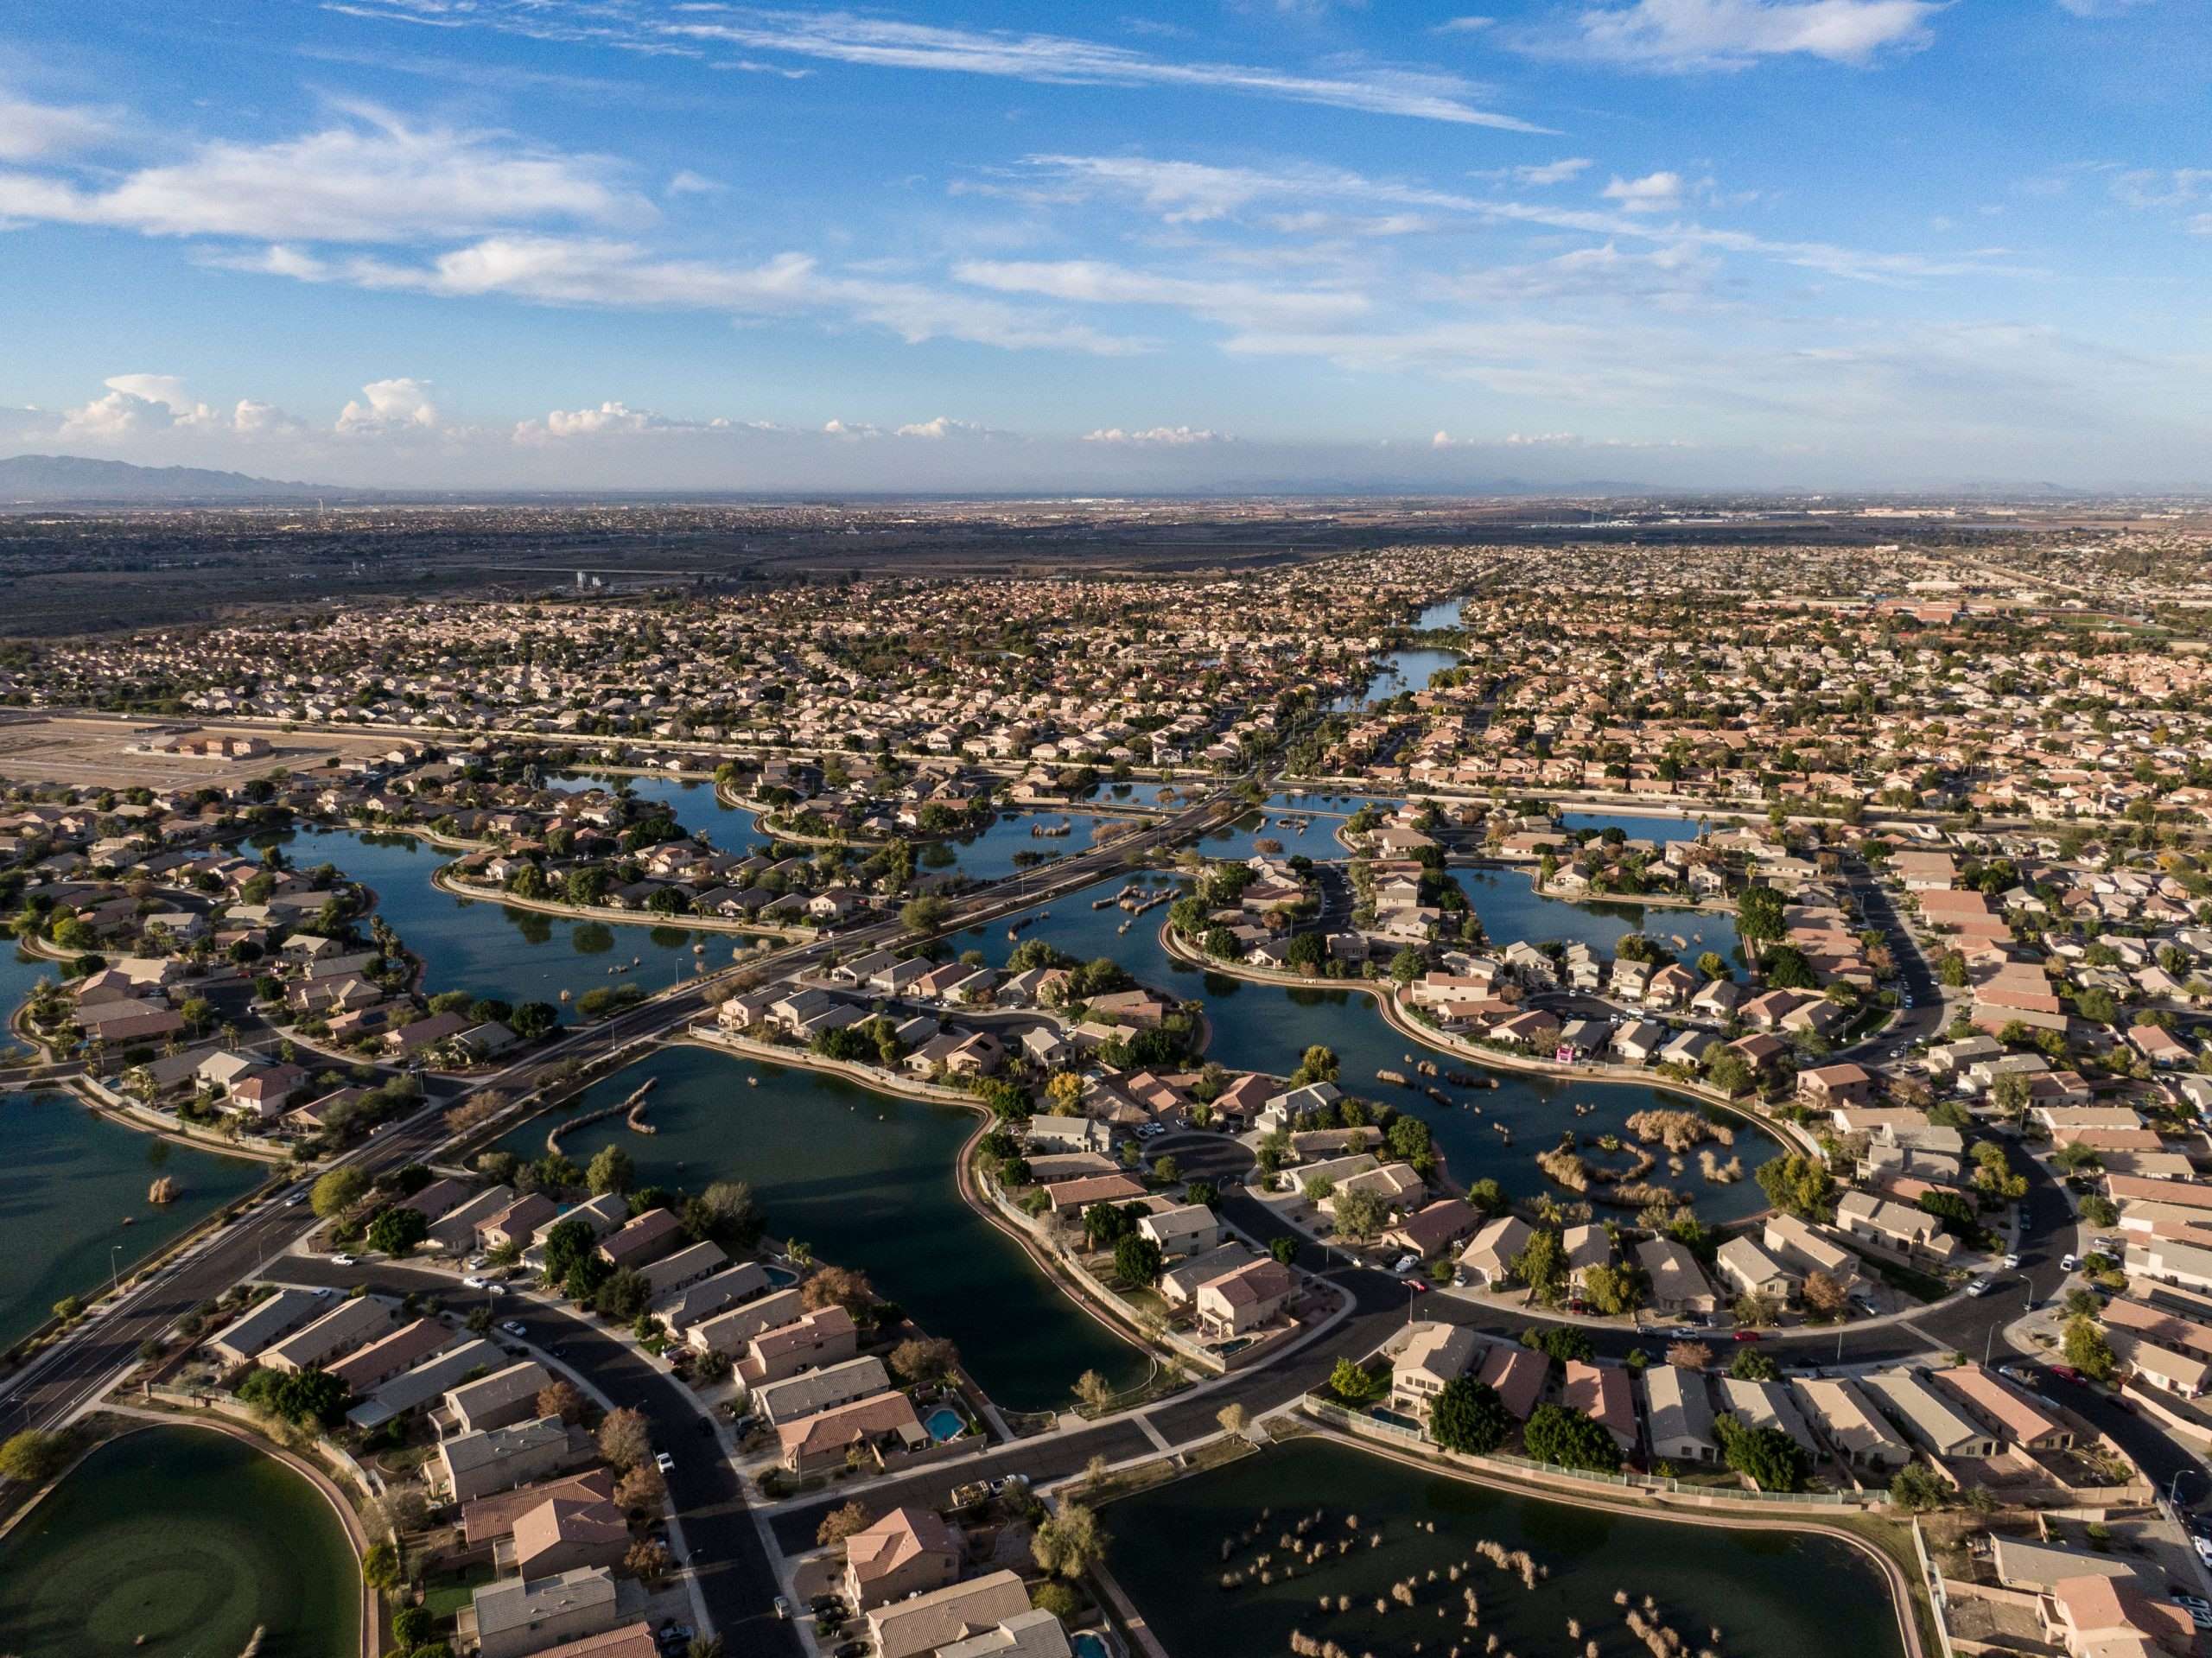 Aerial view of neighborhoods in Arizona